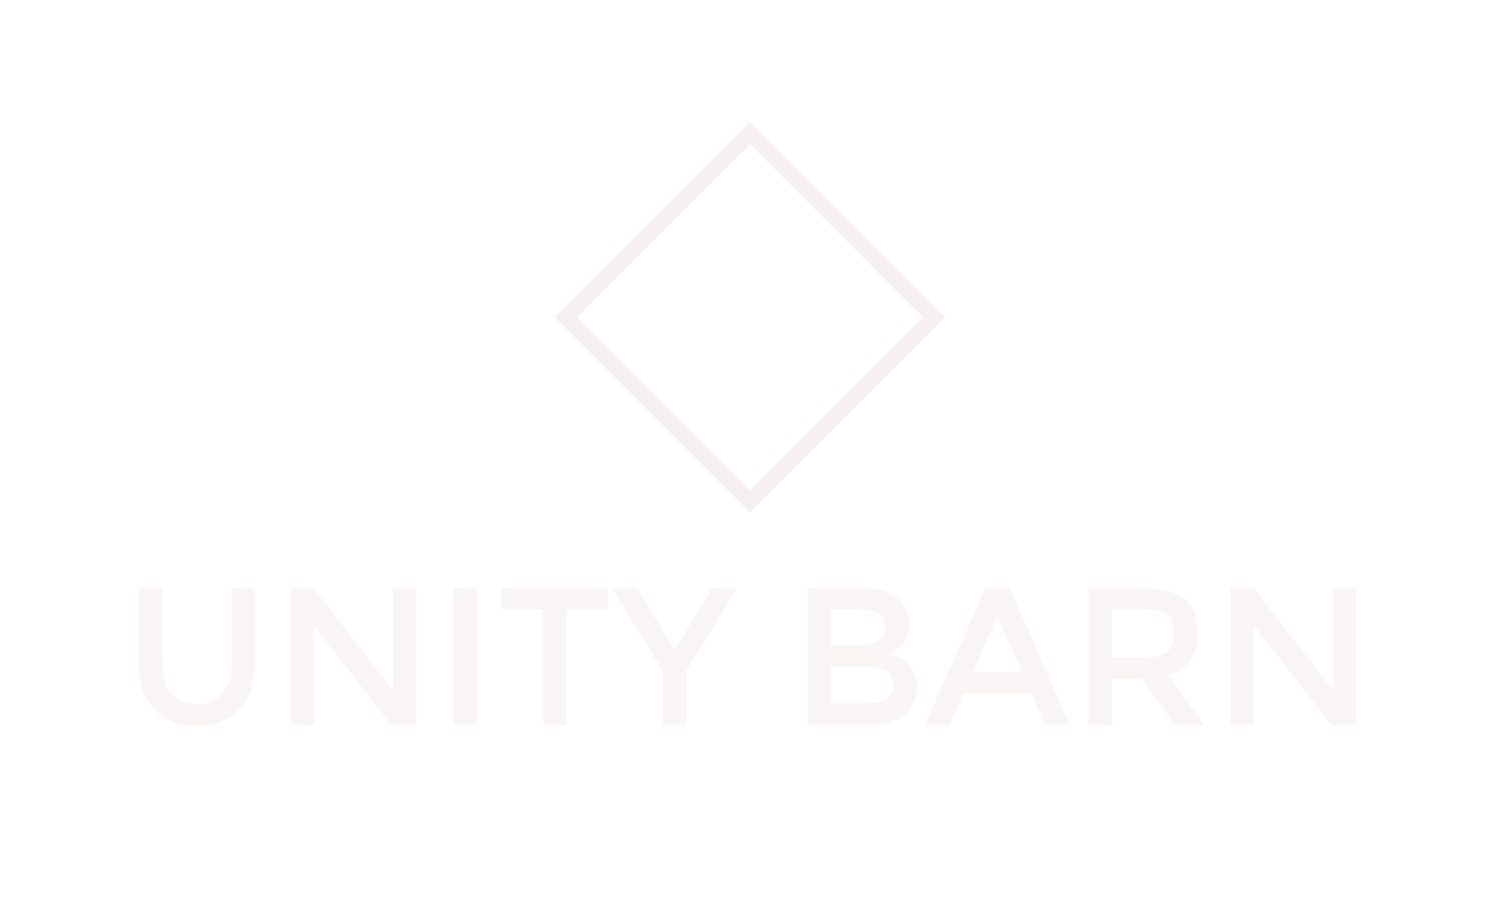 UNITY BARN